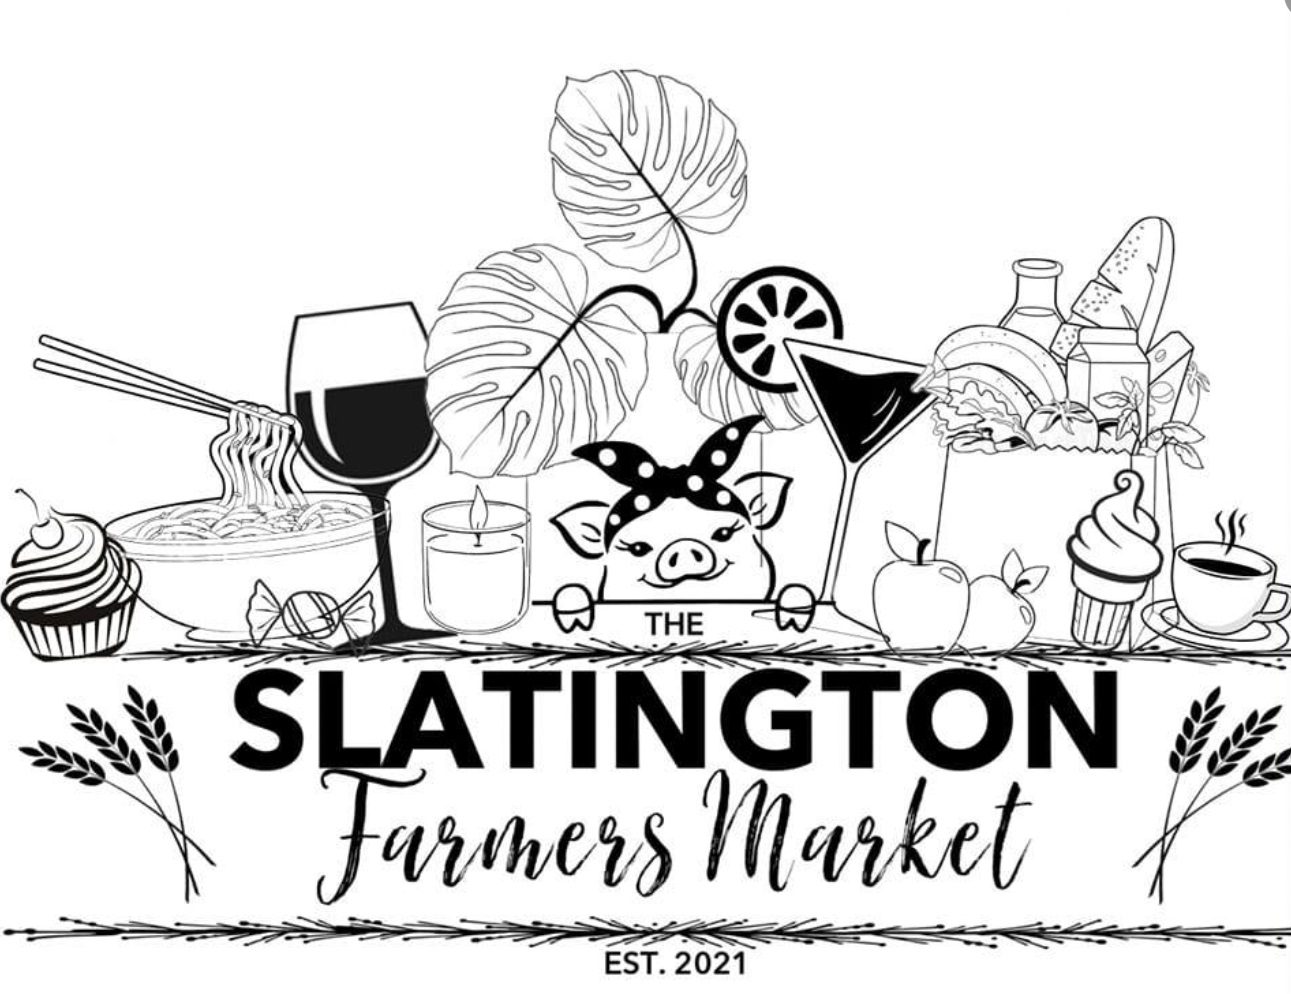 A black and white image of the slatington farmers market.